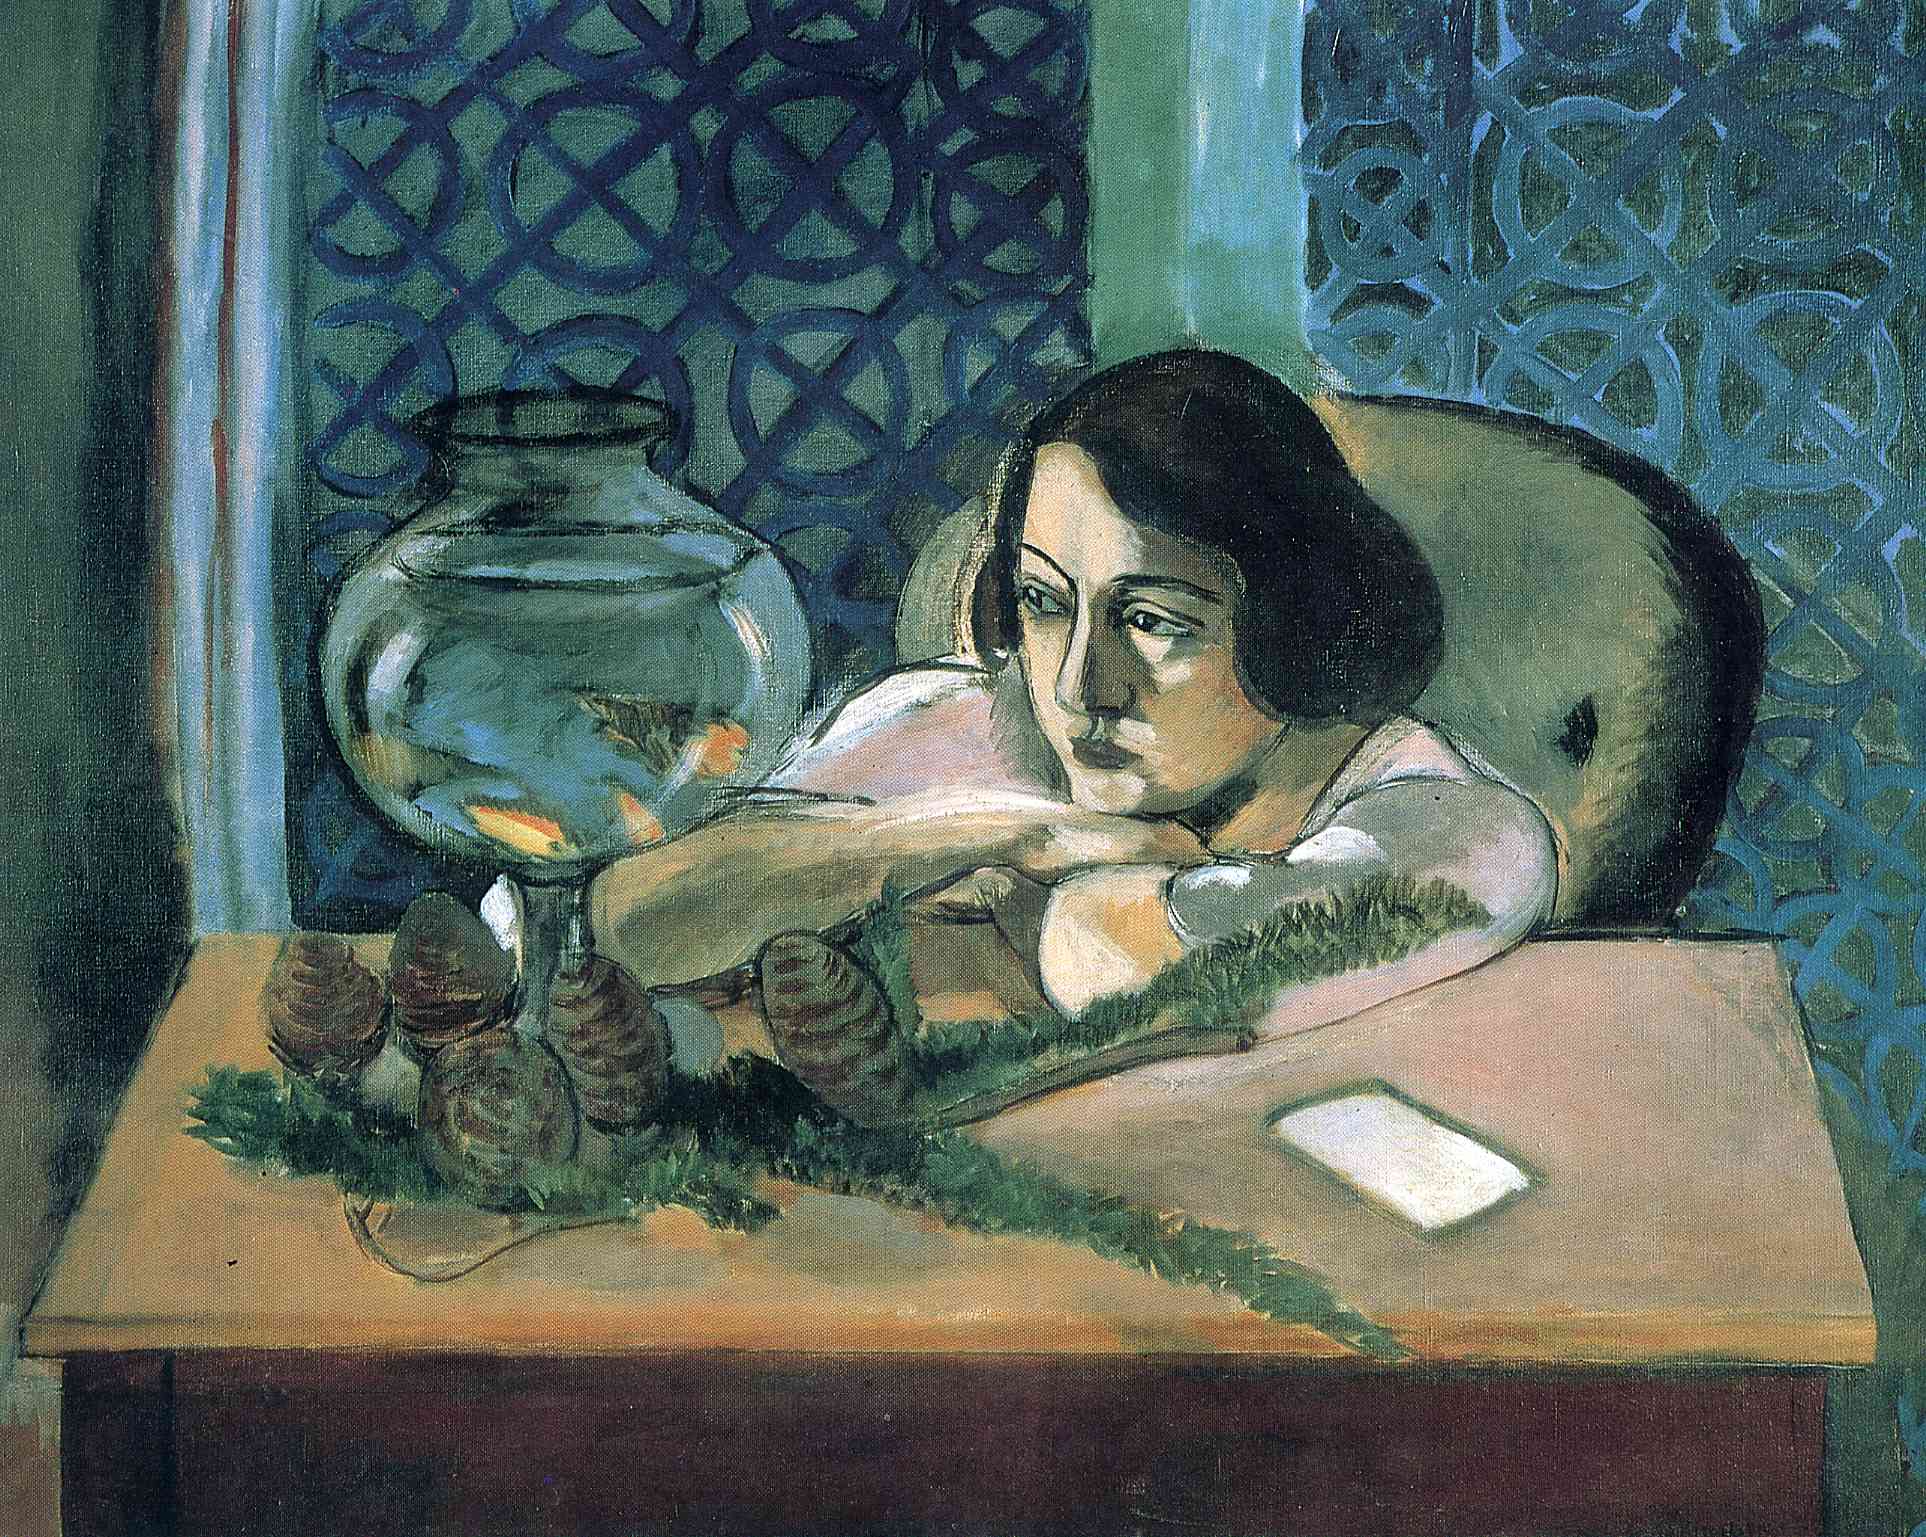 Woman Before a Fish Bowl (1922).